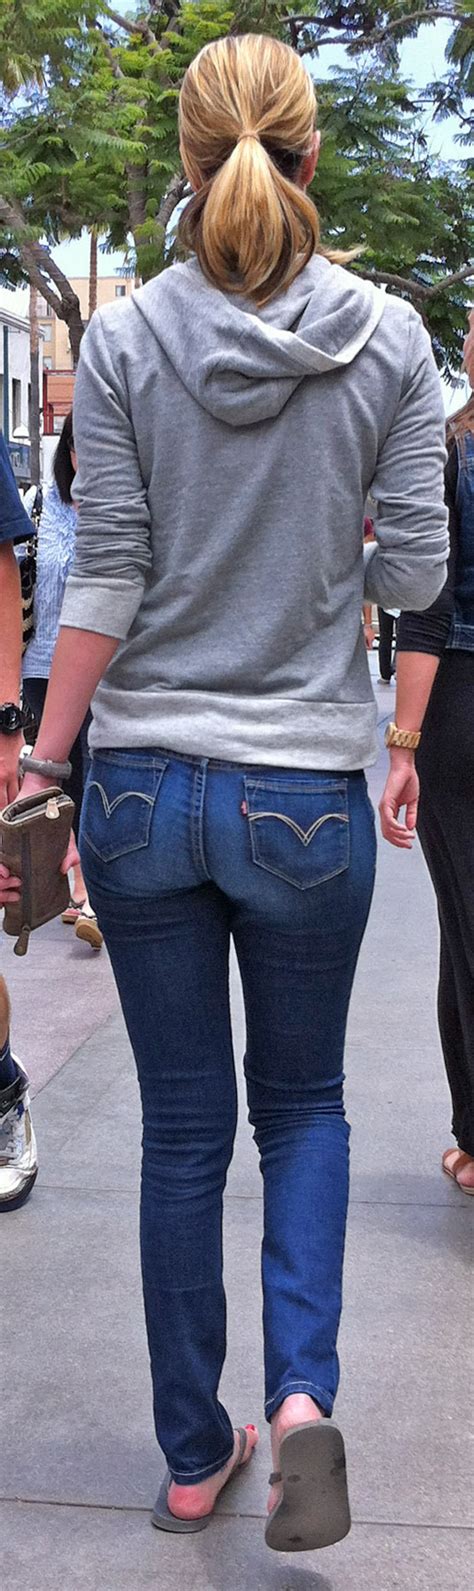 Peepforum Com Threads Bubble Butt On Skinny Blonde In Tight Jeans 127